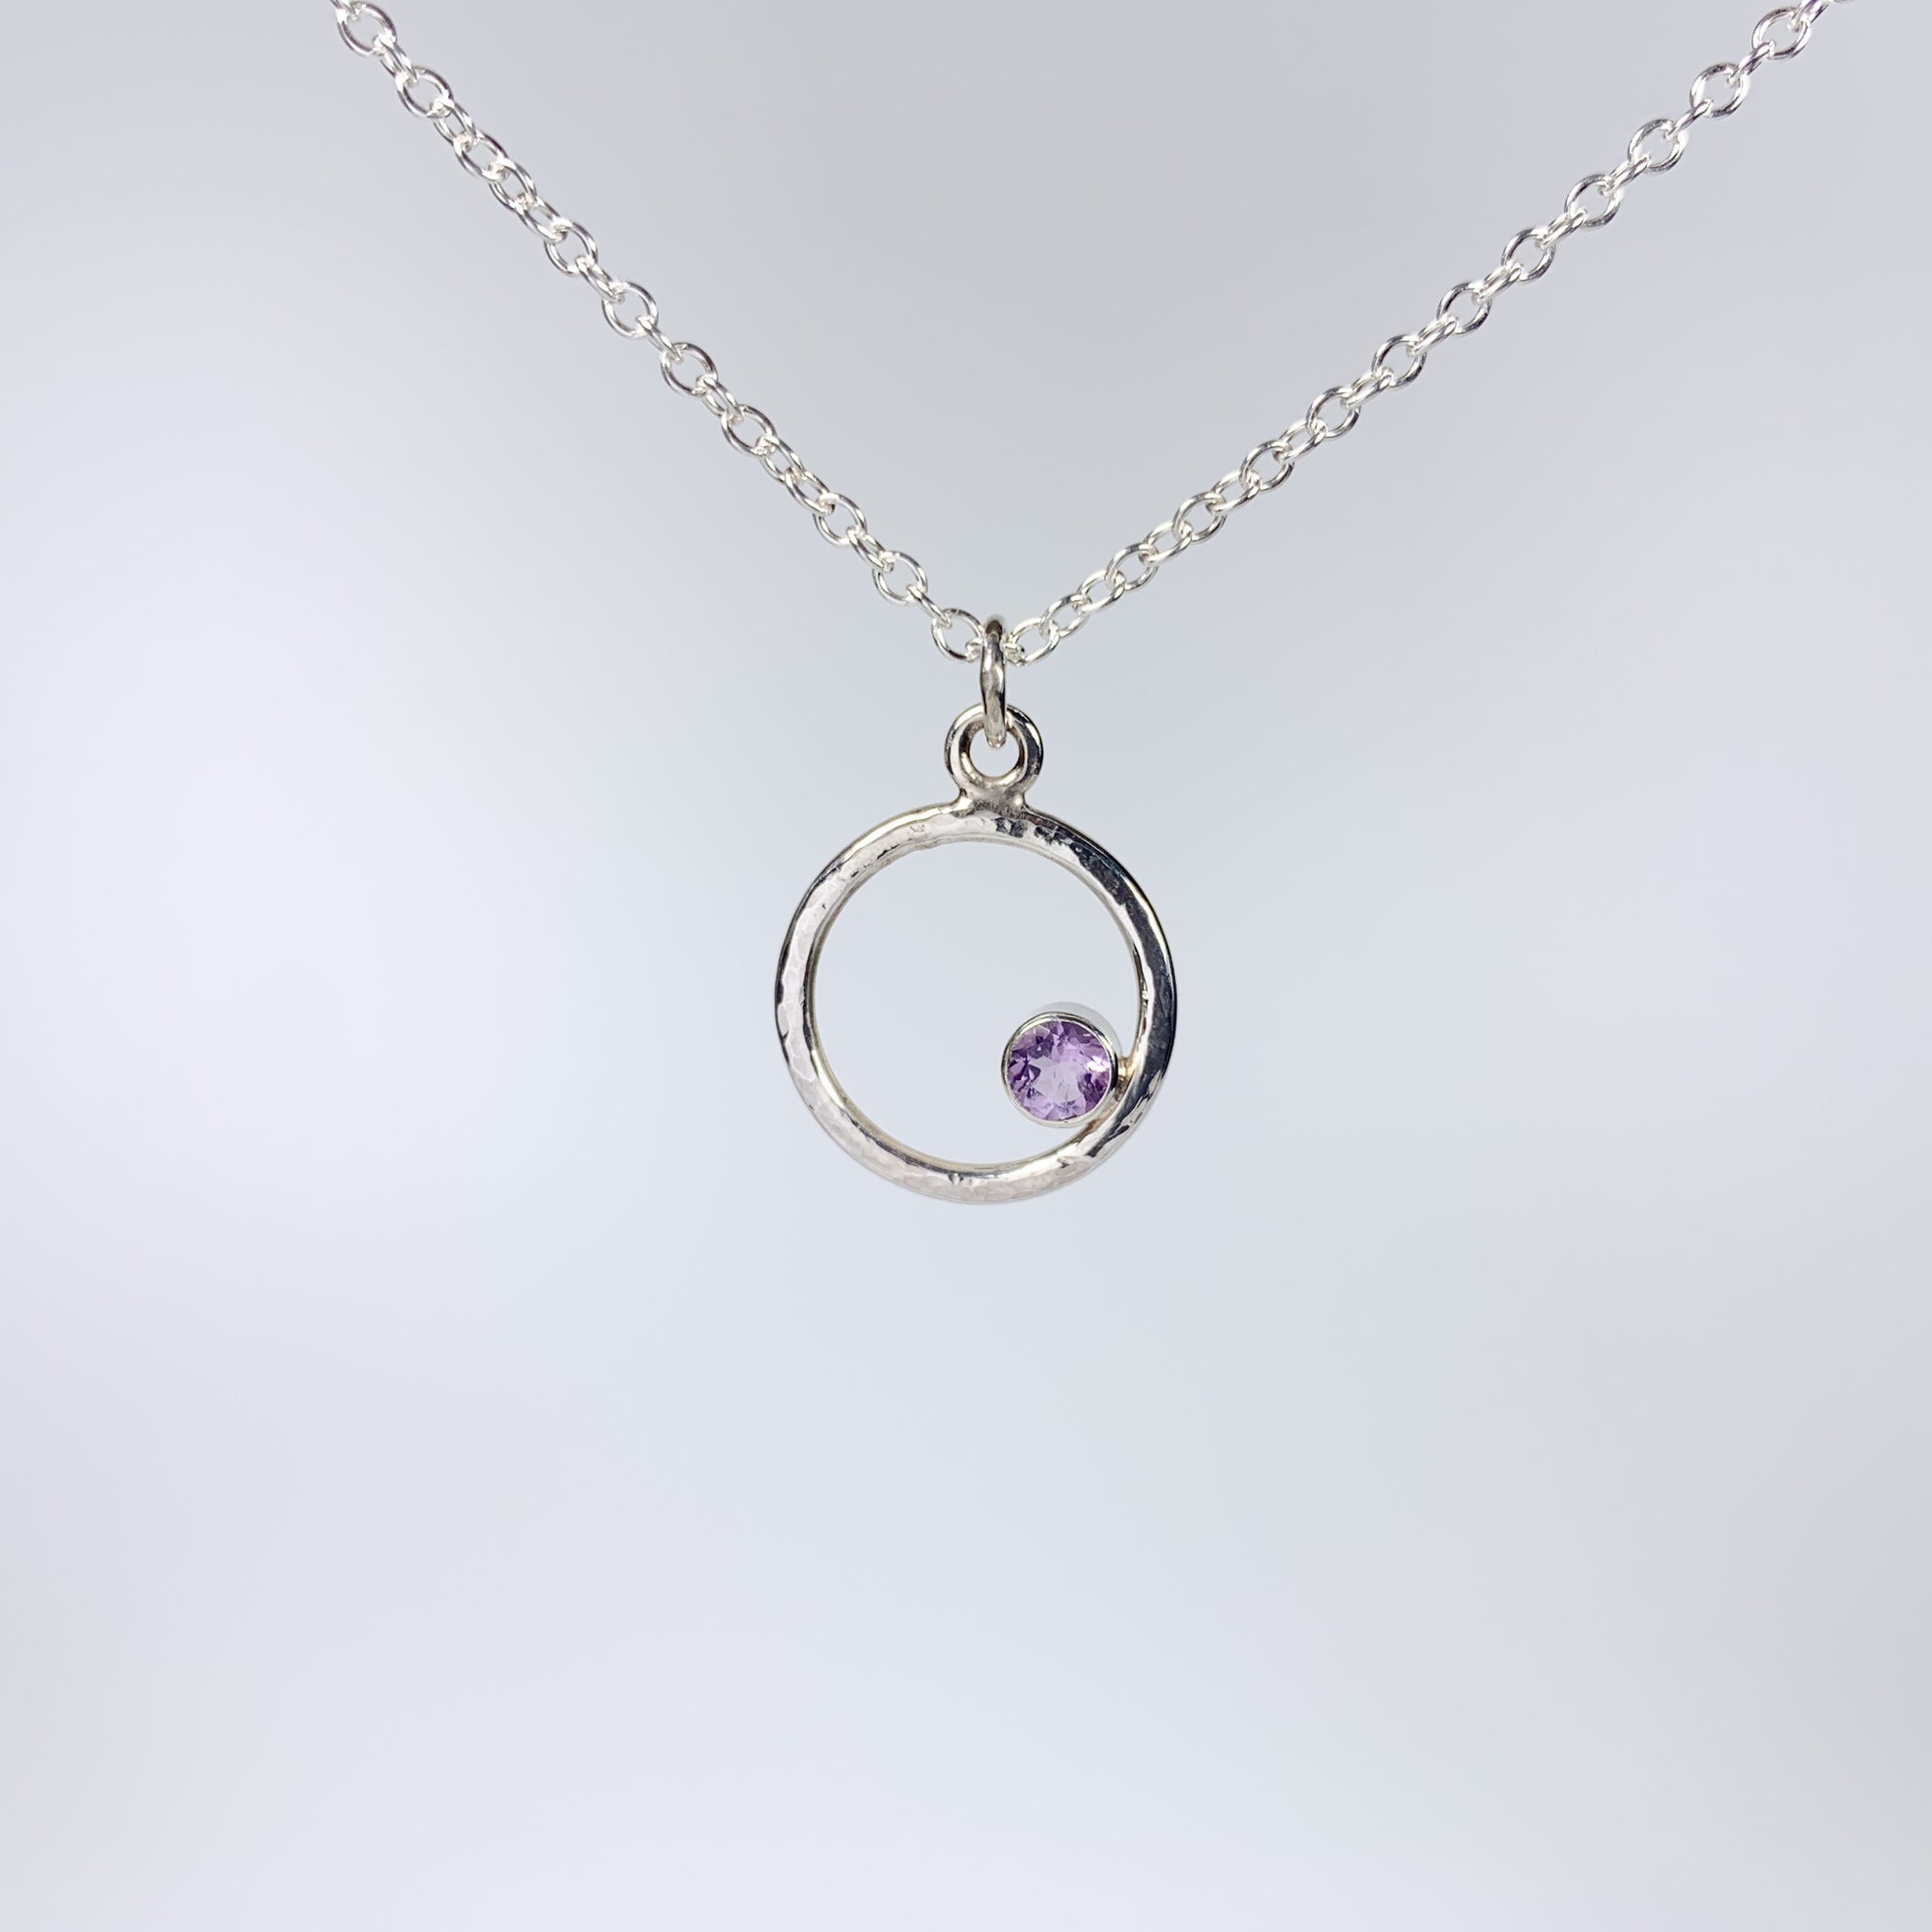 Caldera Eclissi Amethyst Silver Pendant Necklace